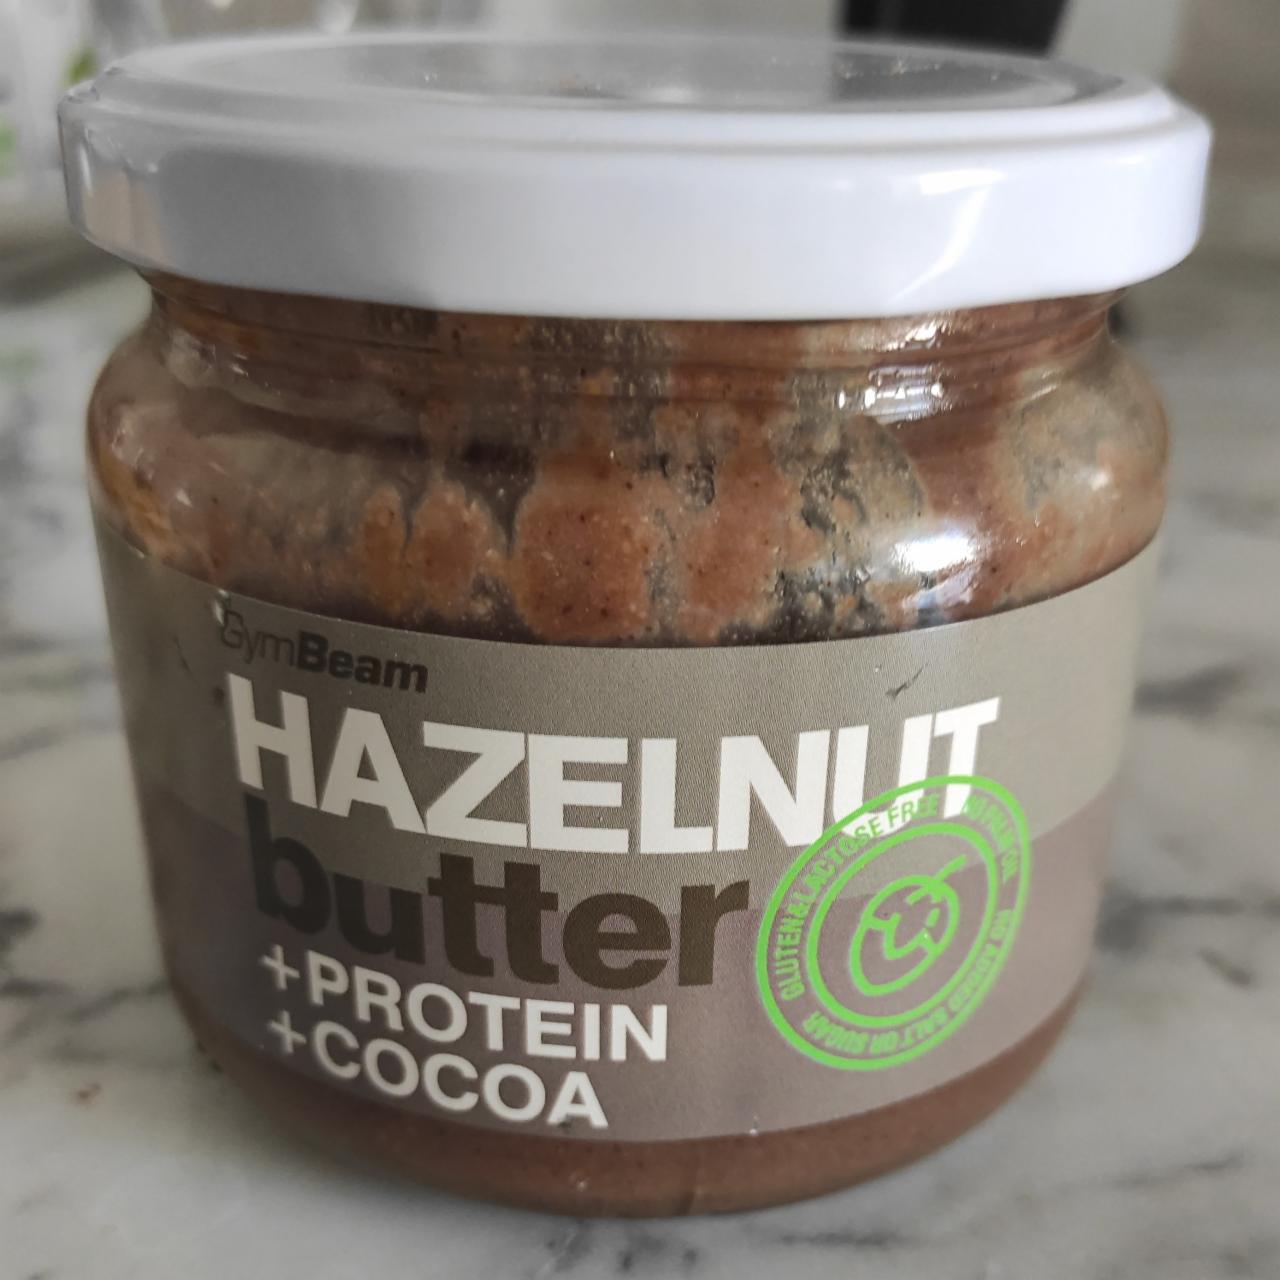 Képek - Hazelnut butter + protein + cocoa GymBeam